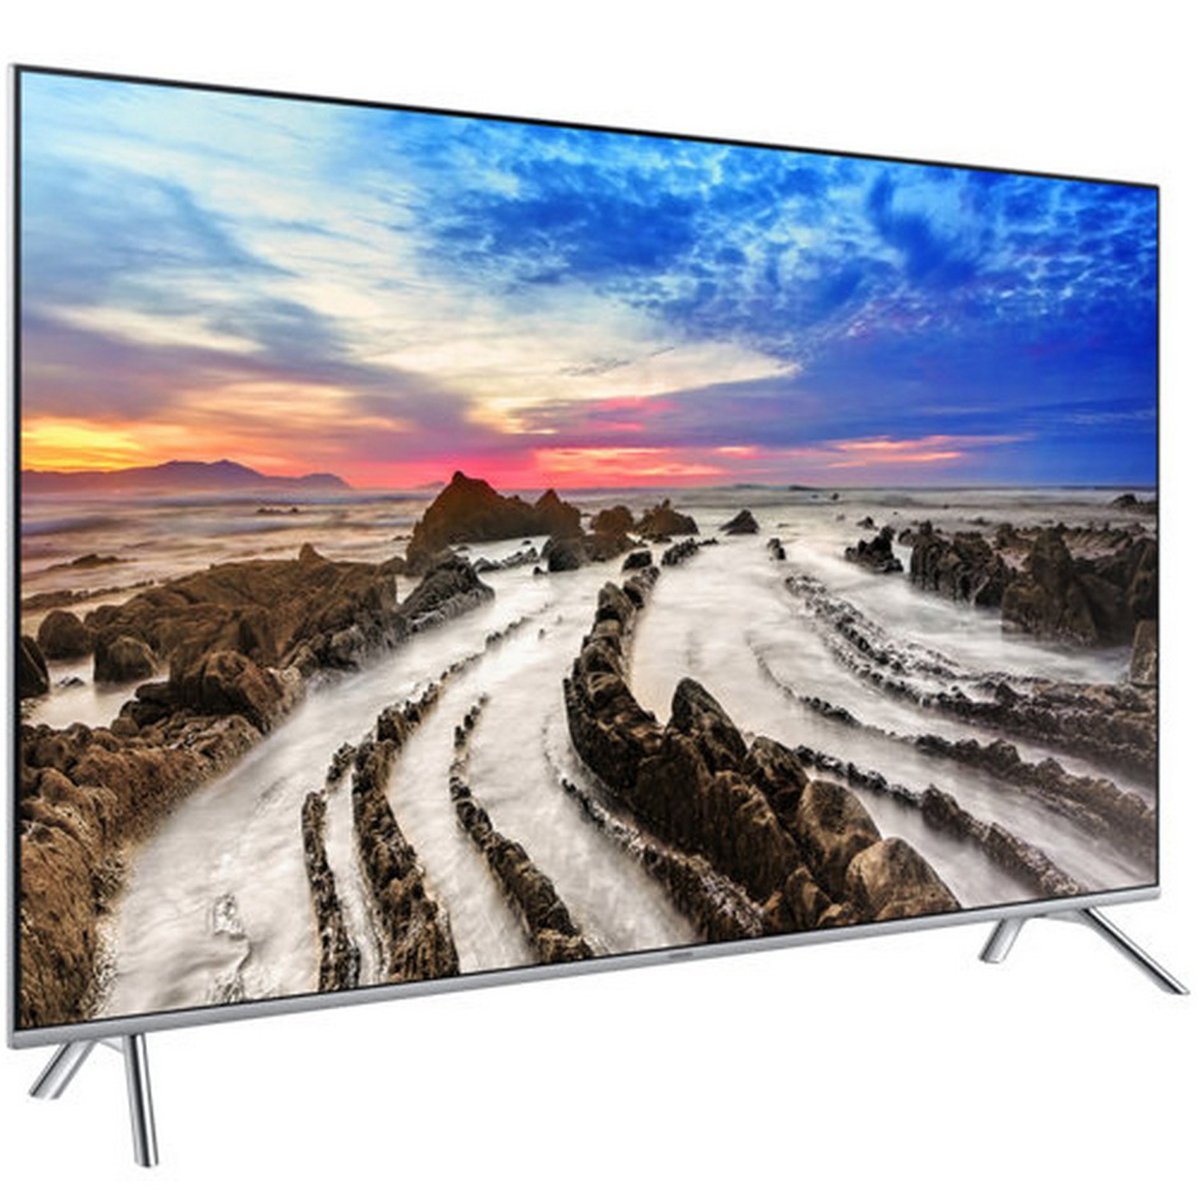 Samsung Ultra HD 4K Smart LED TV UA65MU8000 65inch